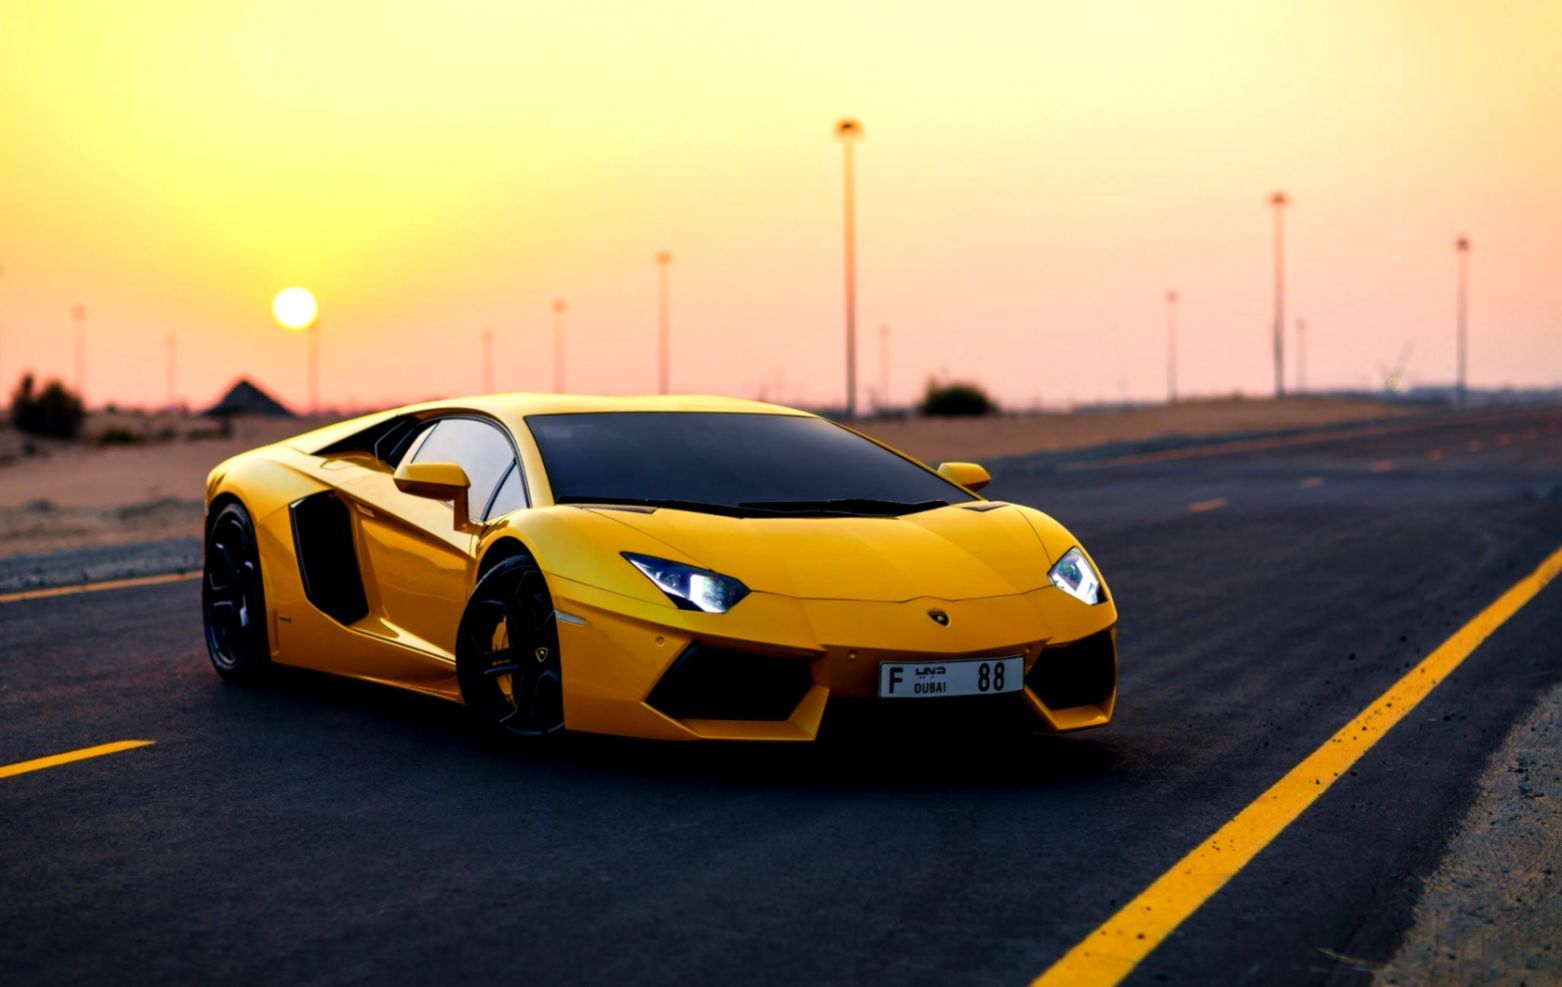 1562x987 Fondo de pantalla de los autos Lamborghini de Tumblr, Tumblr Coche  - Todo fondos